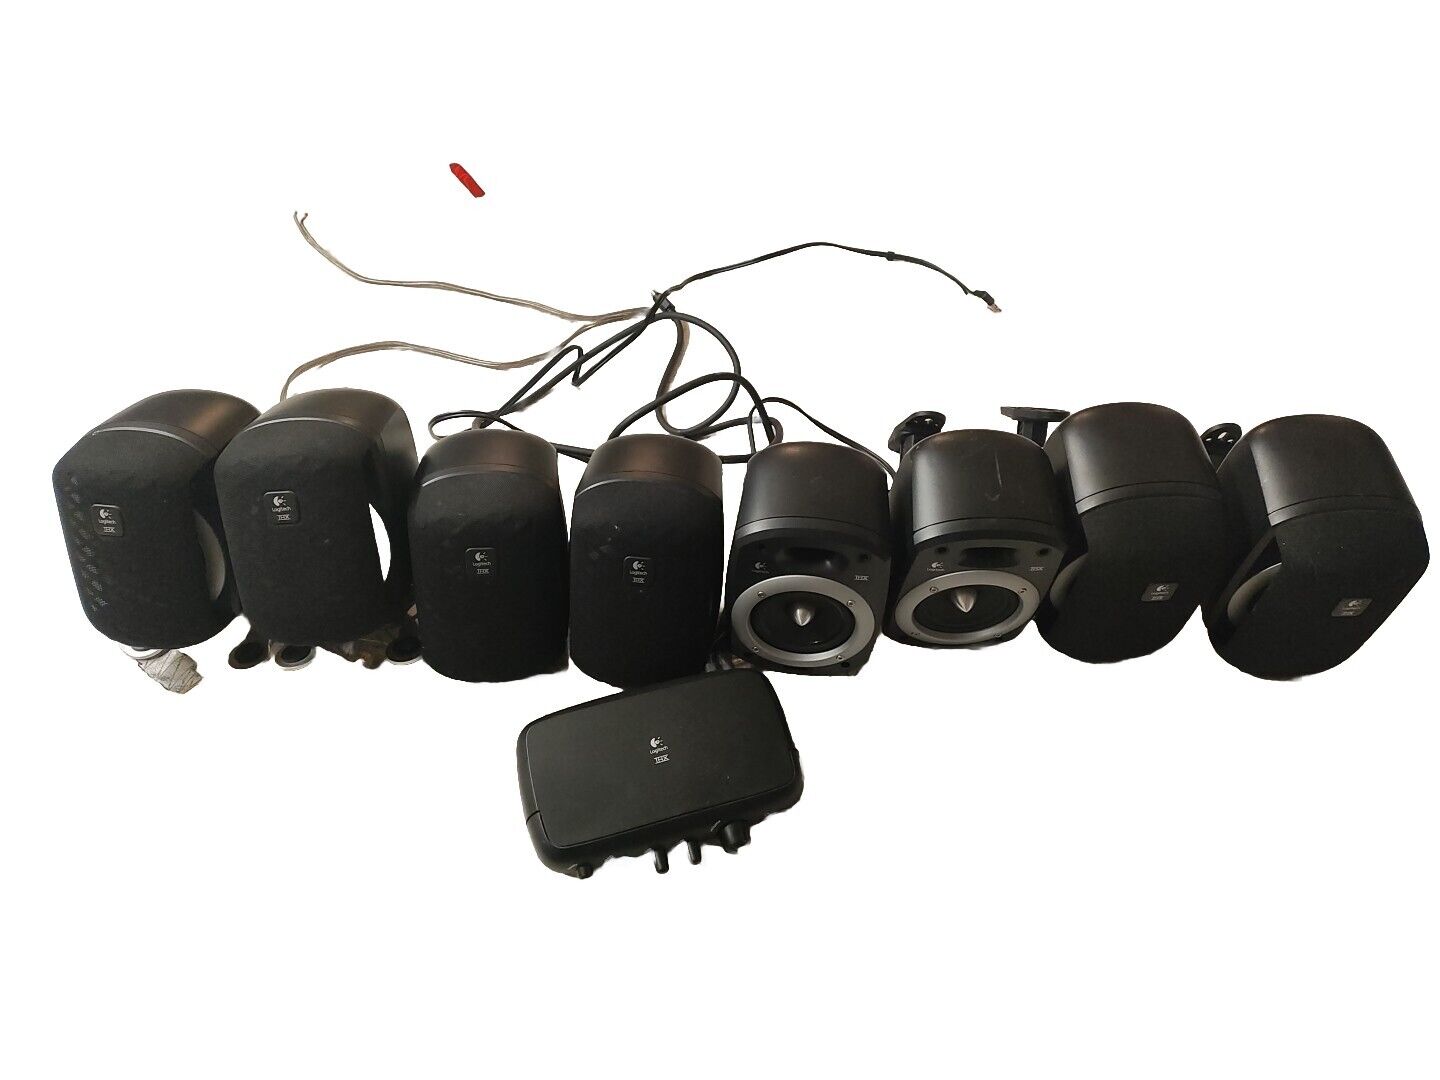 Logitech Z-560 THX Set of 8 Satellite Speakers Surround Sound Home Theater